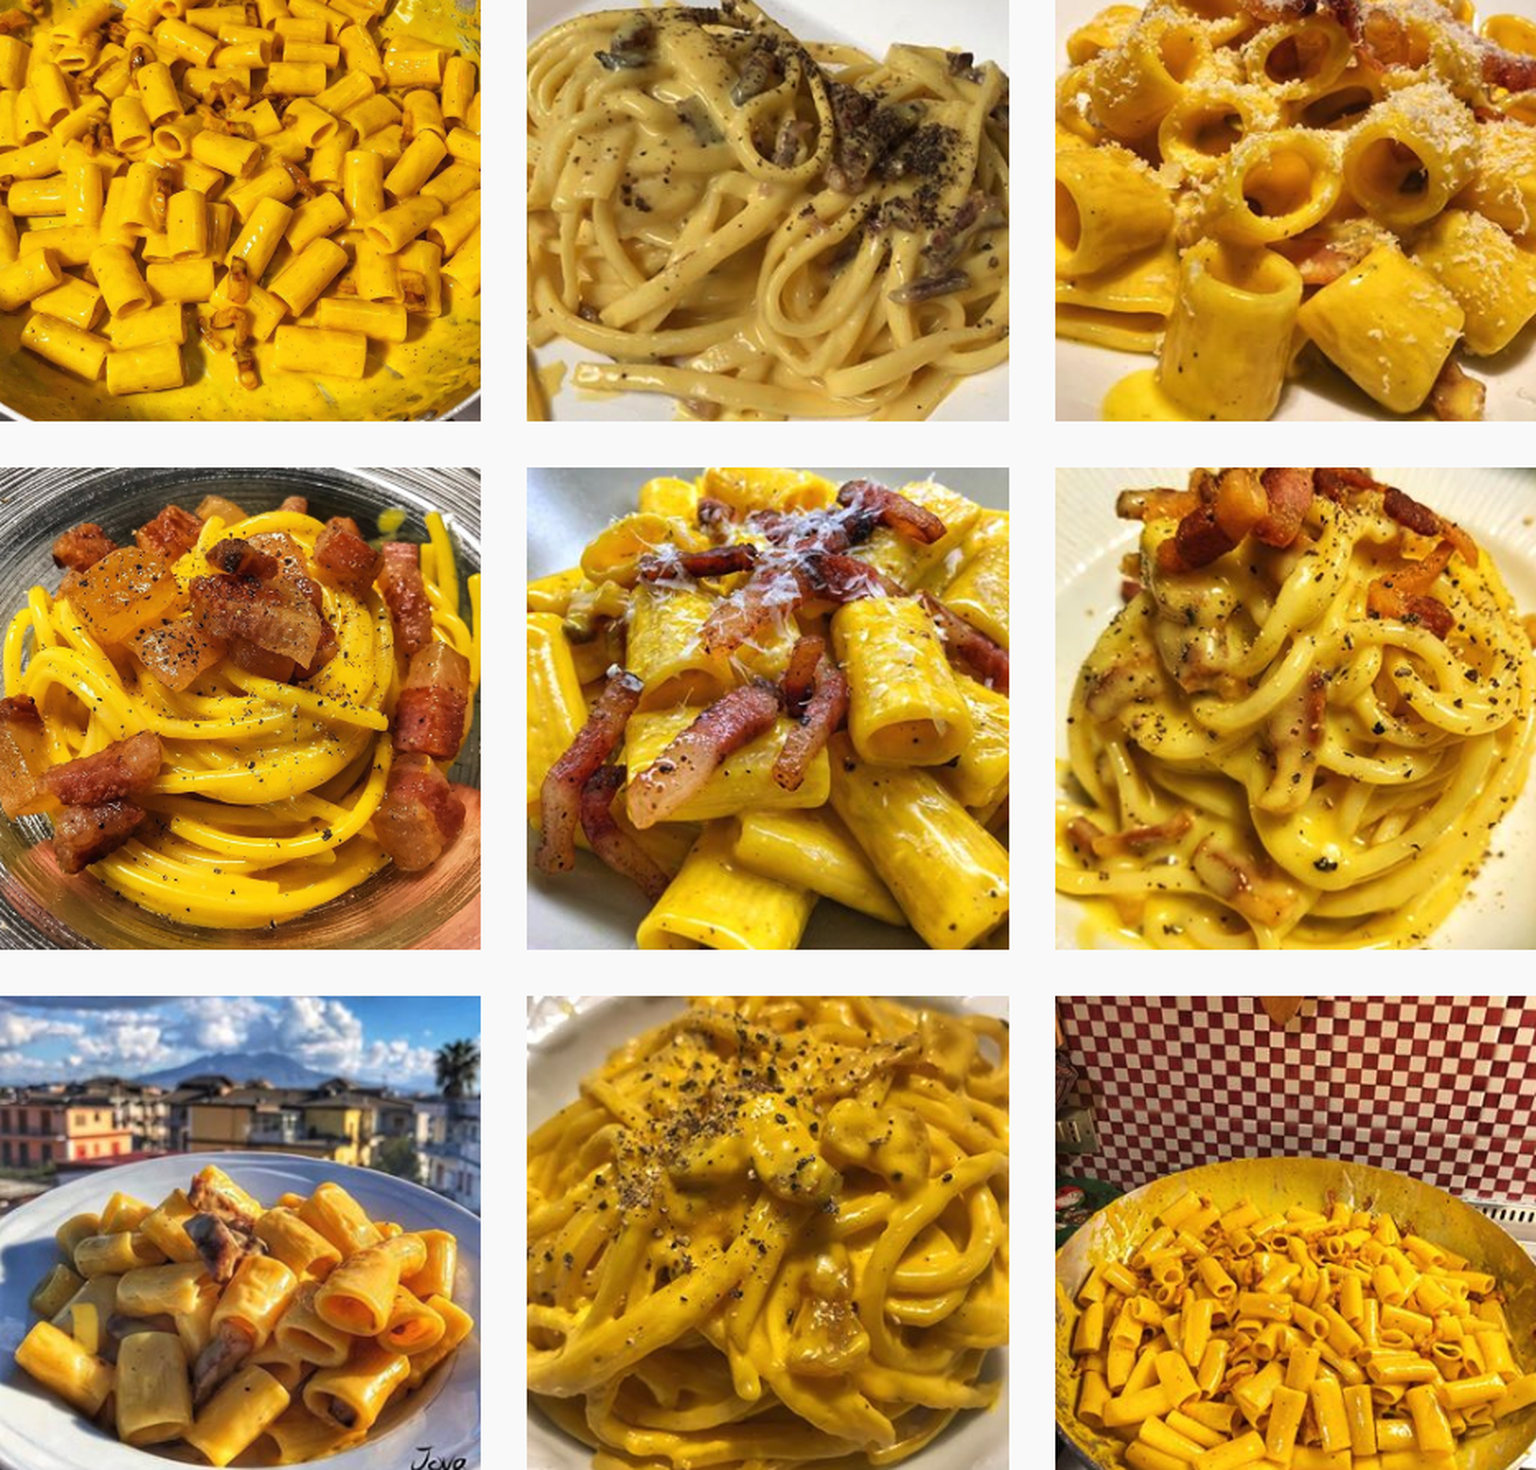 Carbogang carbonara italien instagram essen food guanciale rom https://www.instagram.com/carbogang/